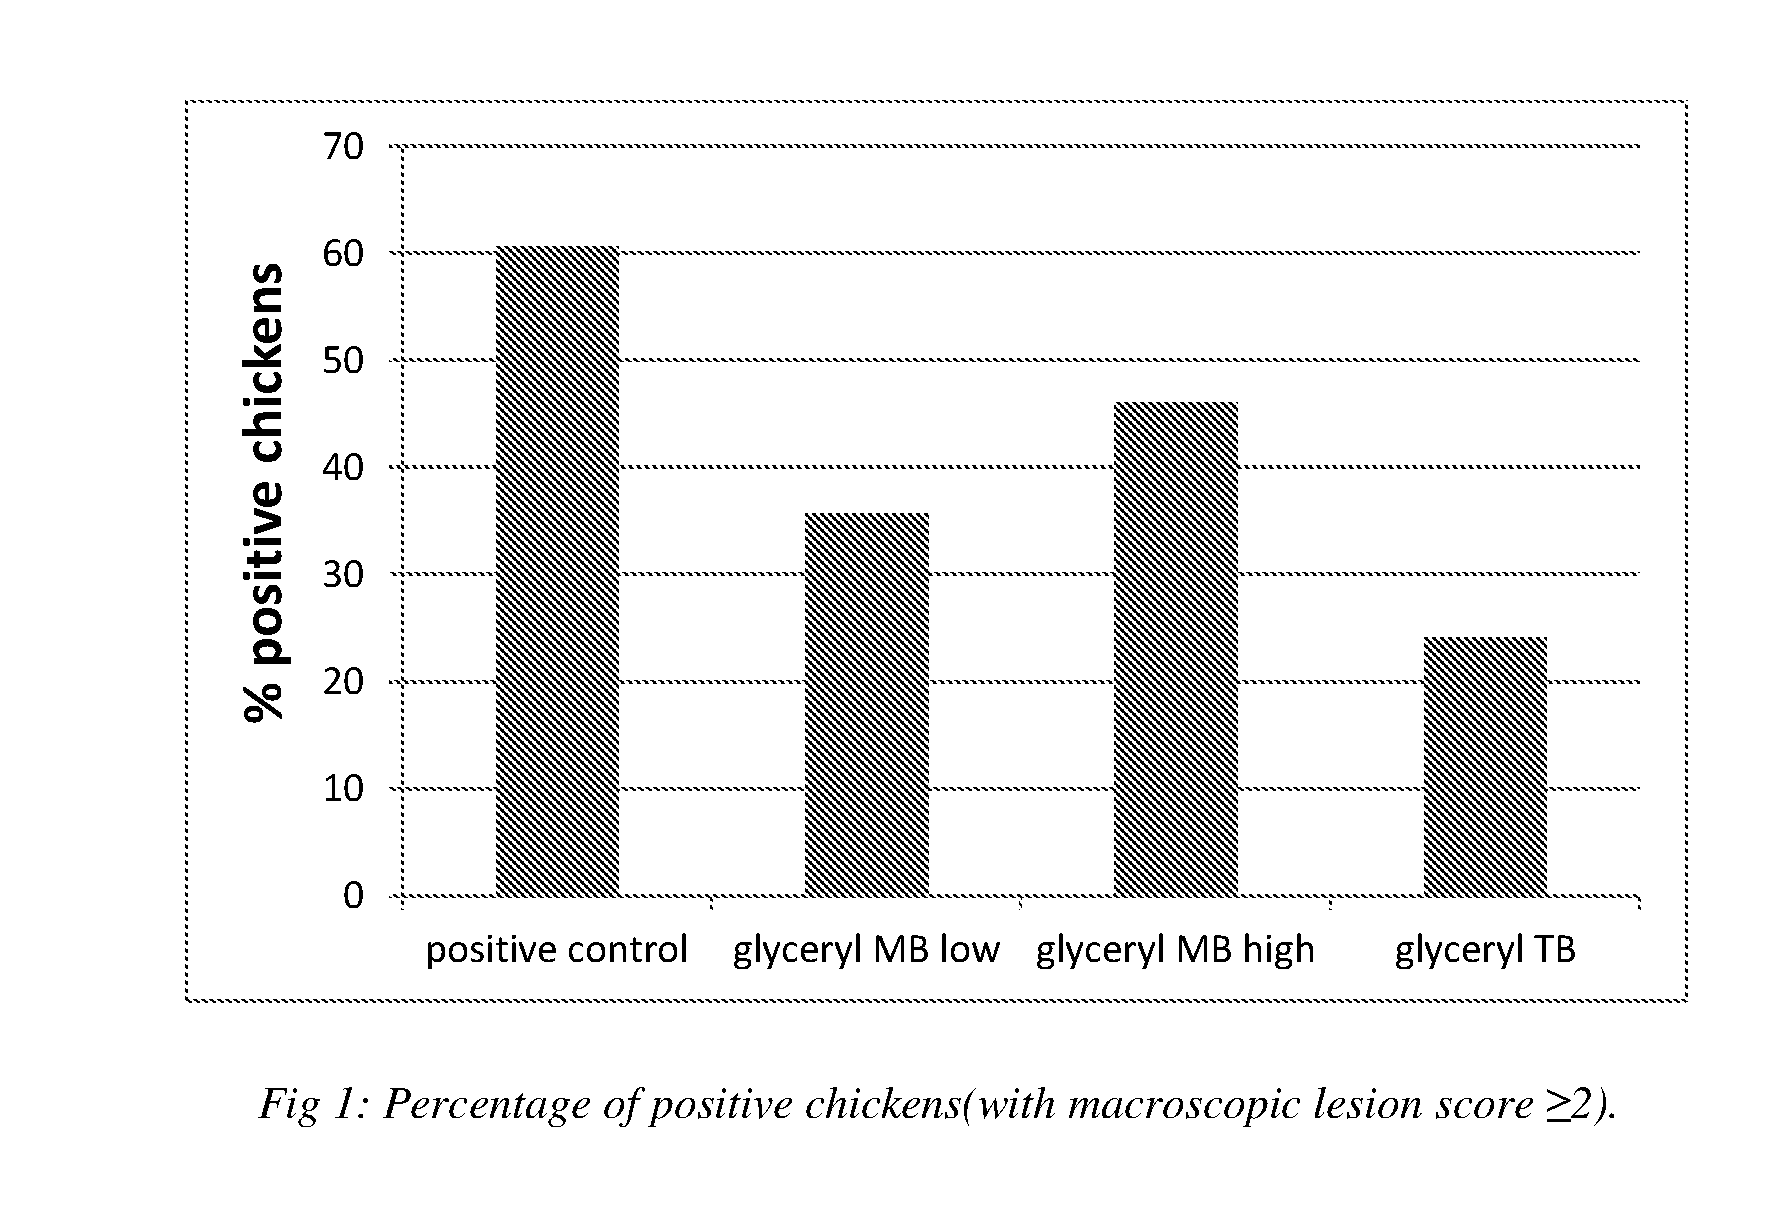 Composition preventing necrotic enteritis in galloanserans